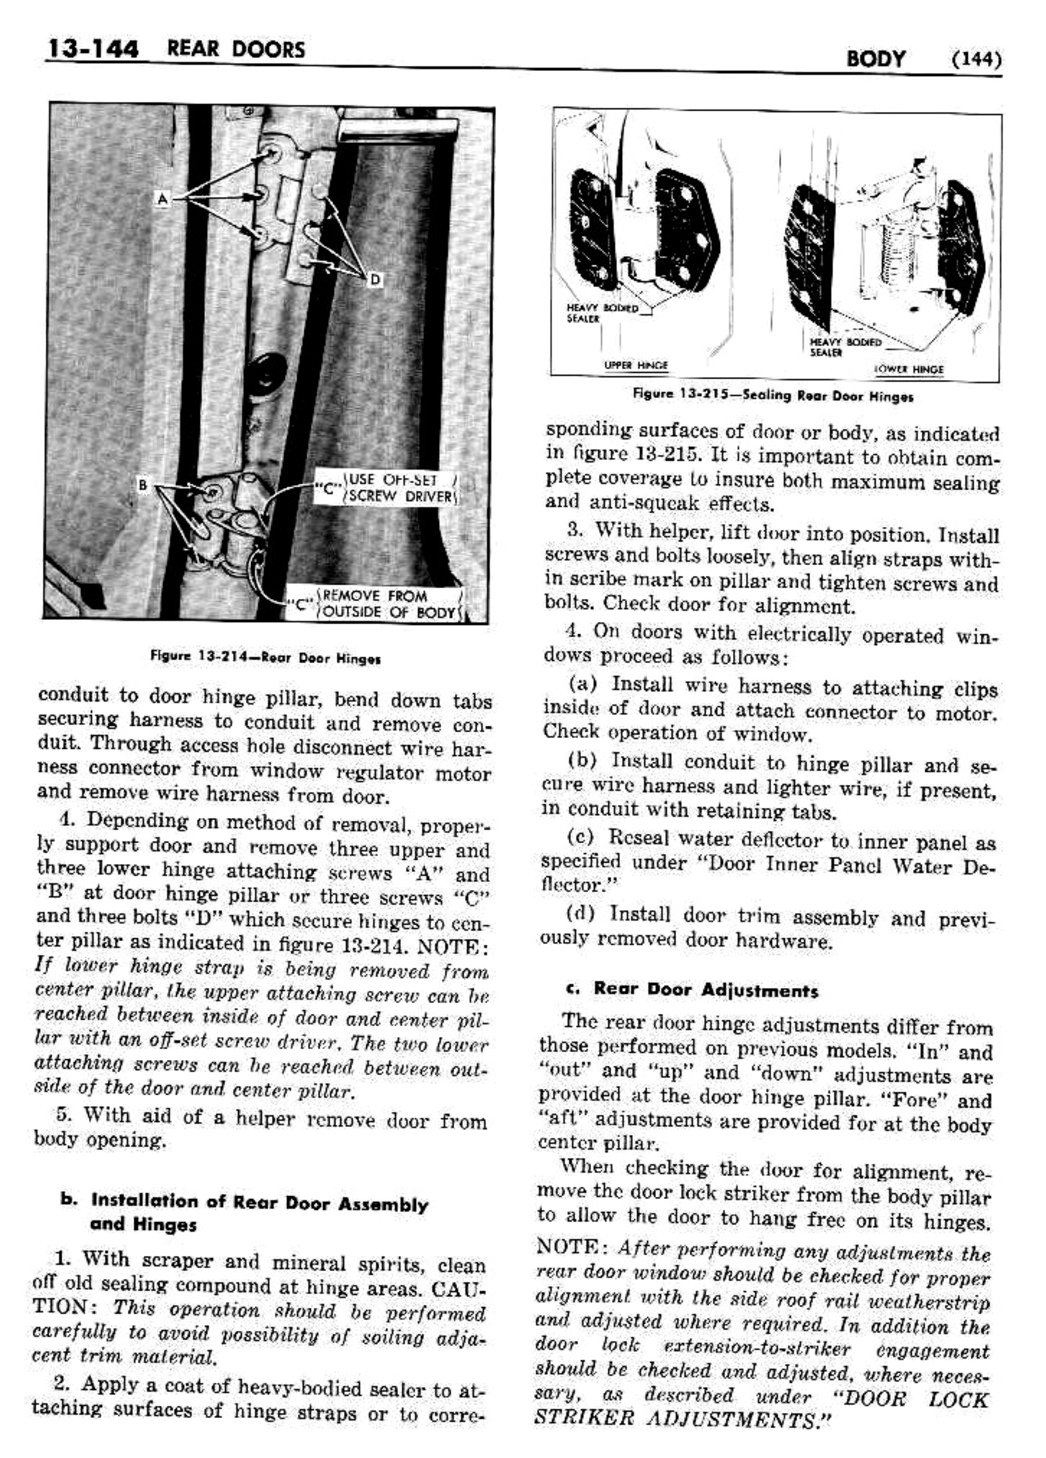 n_1958 Buick Body Service Manual-145-145.jpg